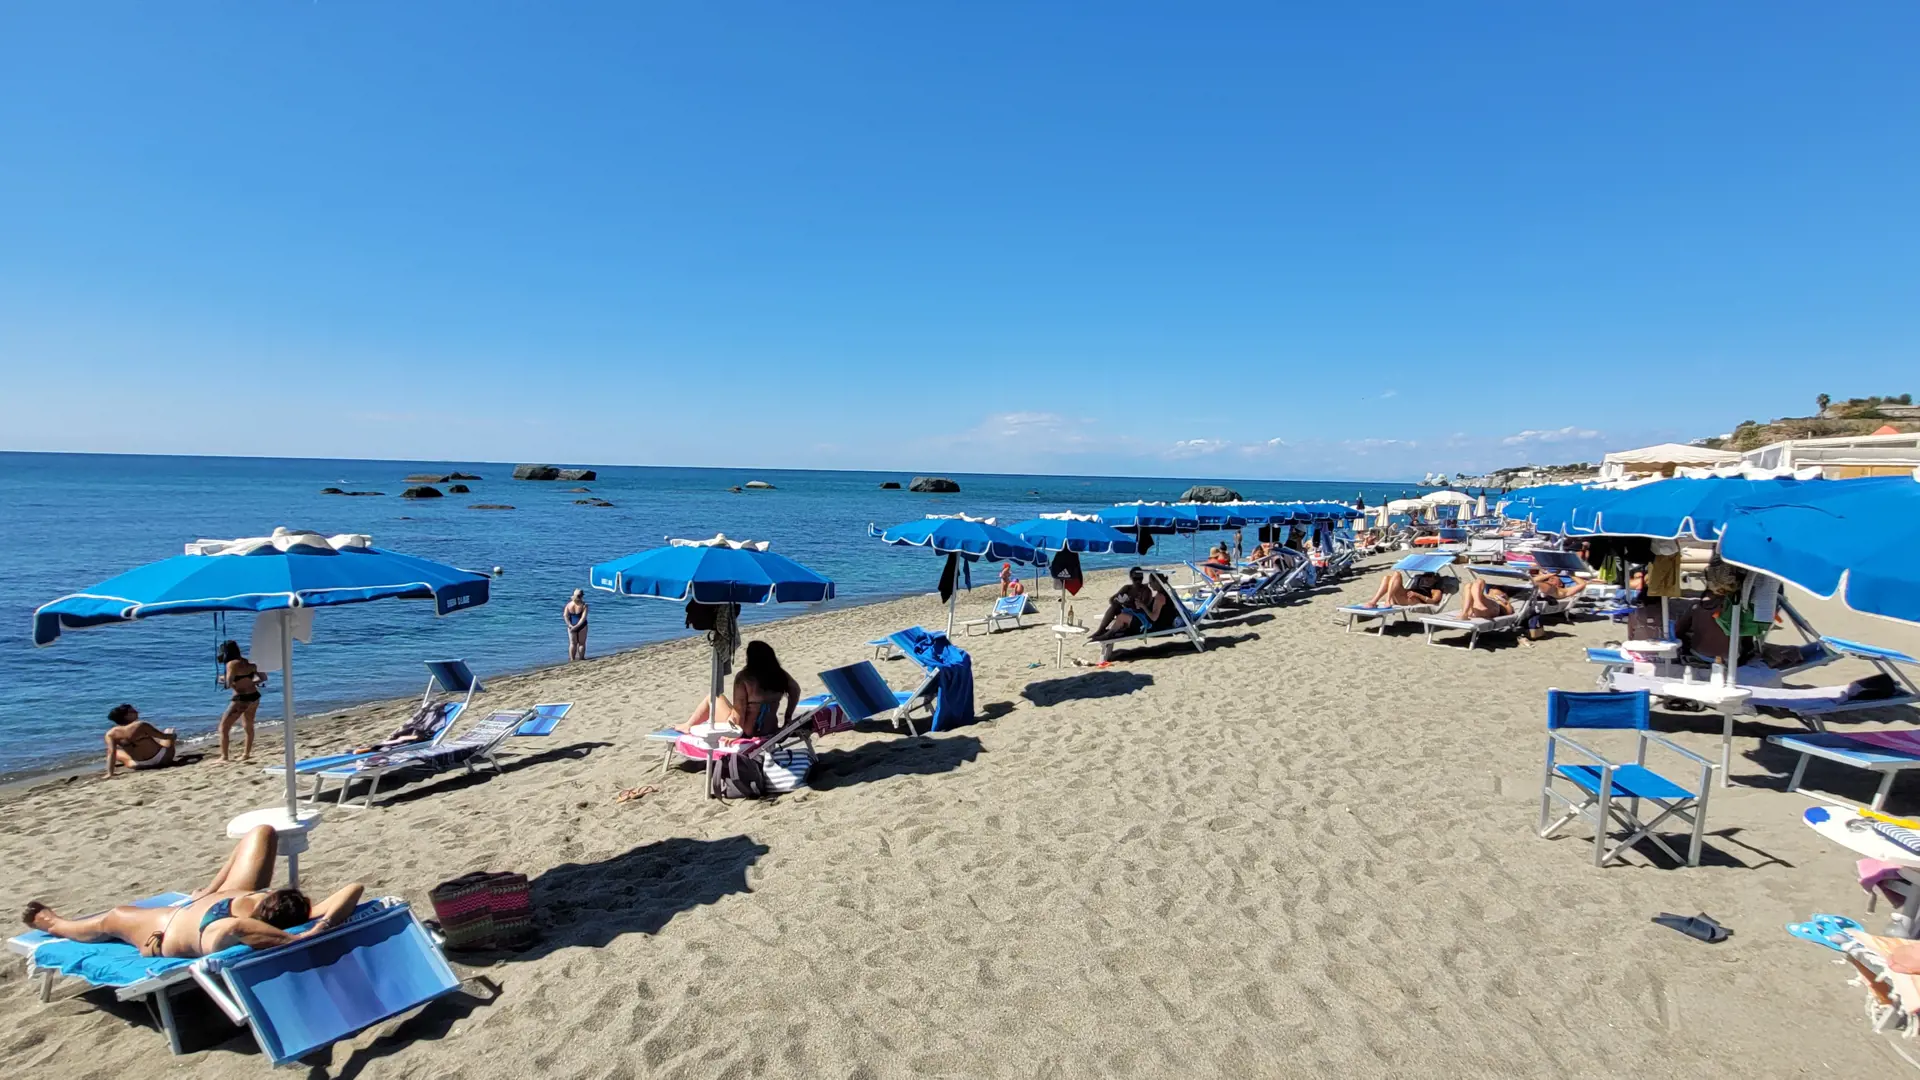 Citara-stranden ligger 5 minutters gang fra Hotel Semiramis